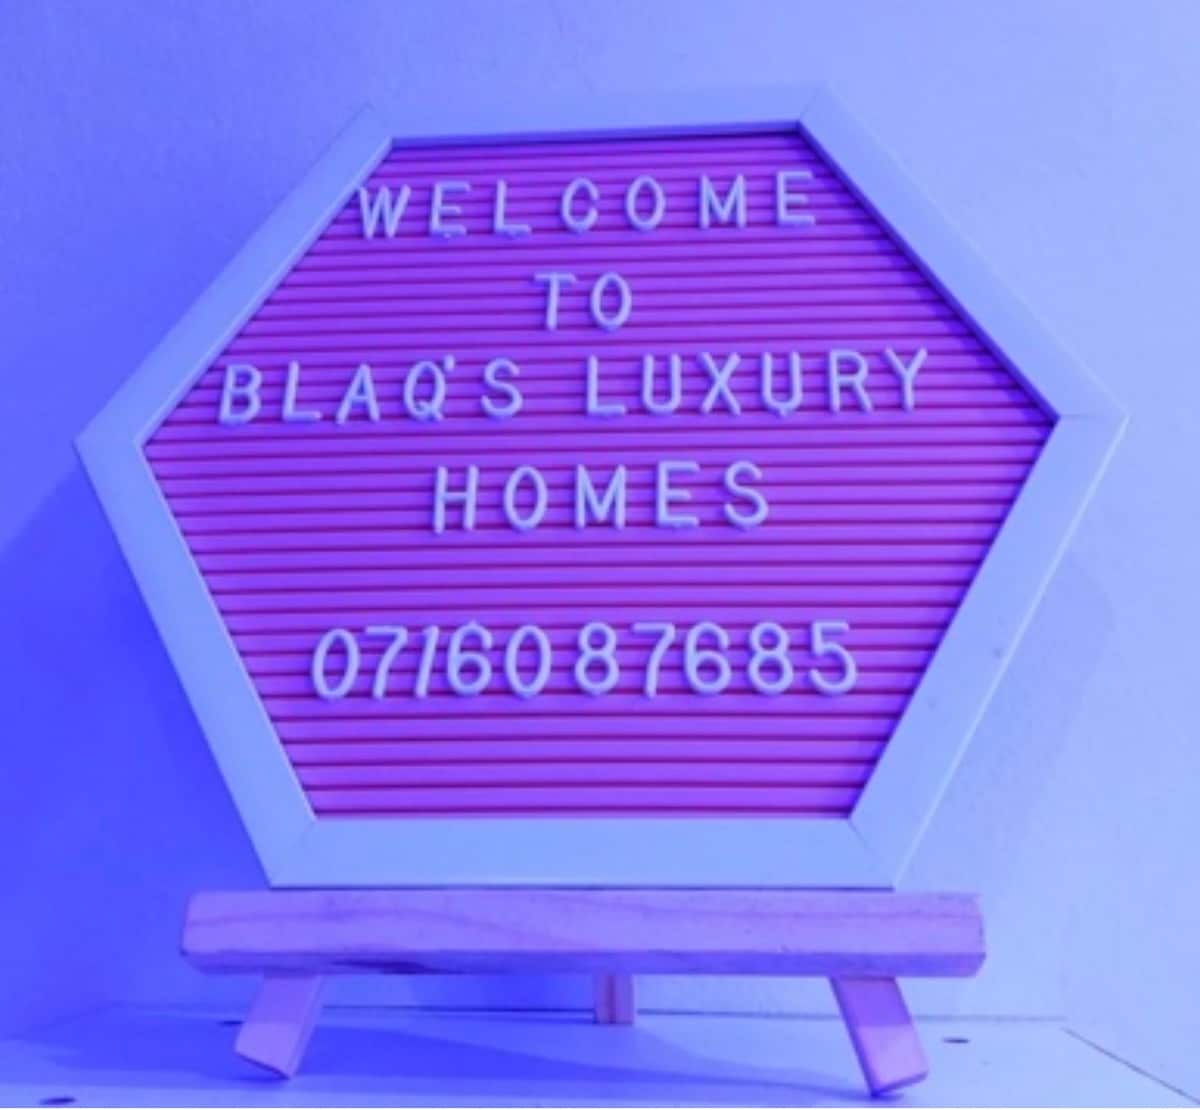 Blaq’s Luxury Homes-Eclectic 1BR